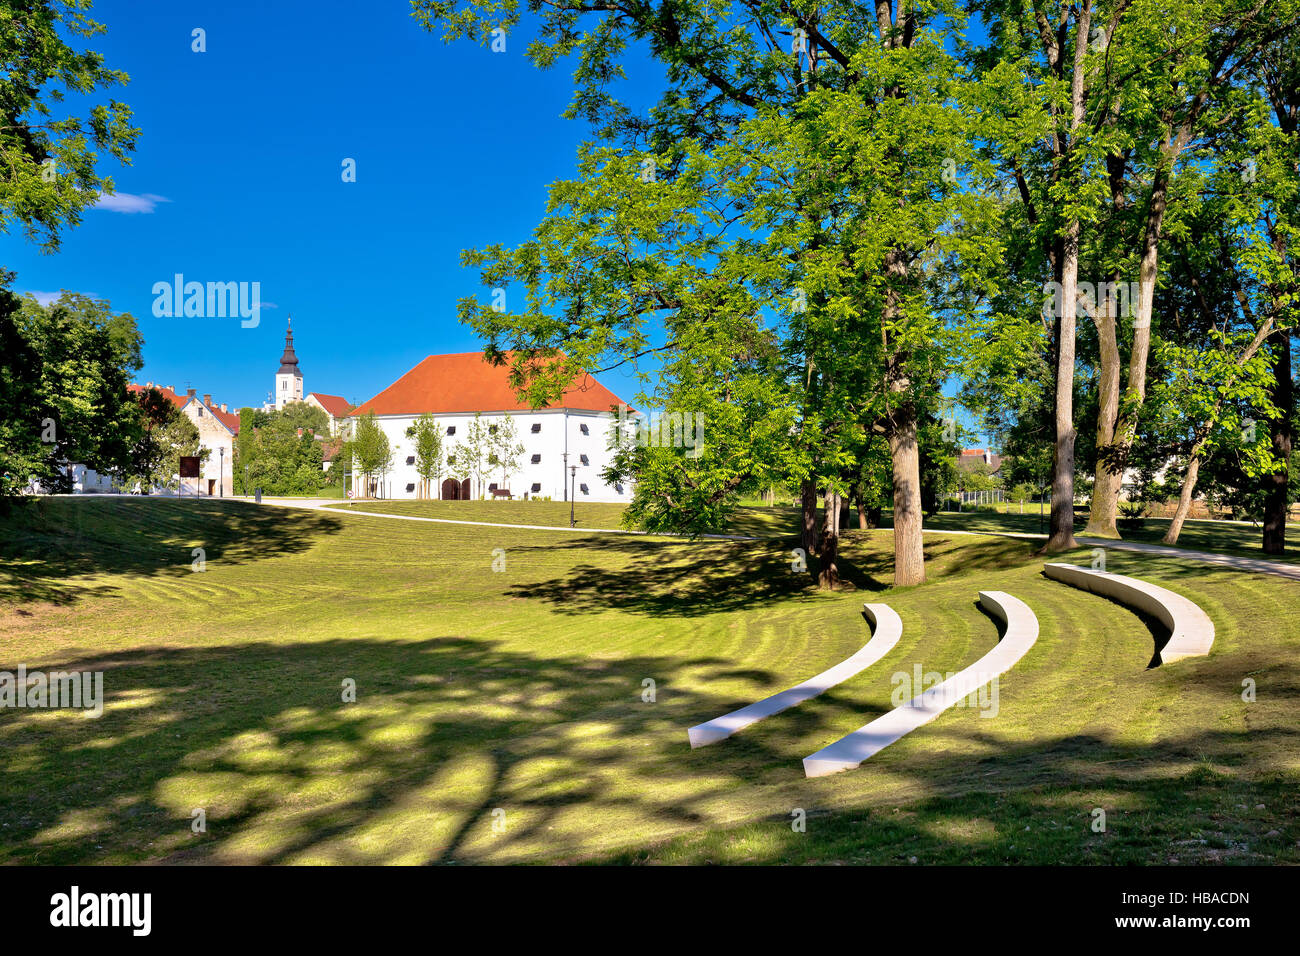 Town of Jastrebarsko park and landmarks view Stock Photo